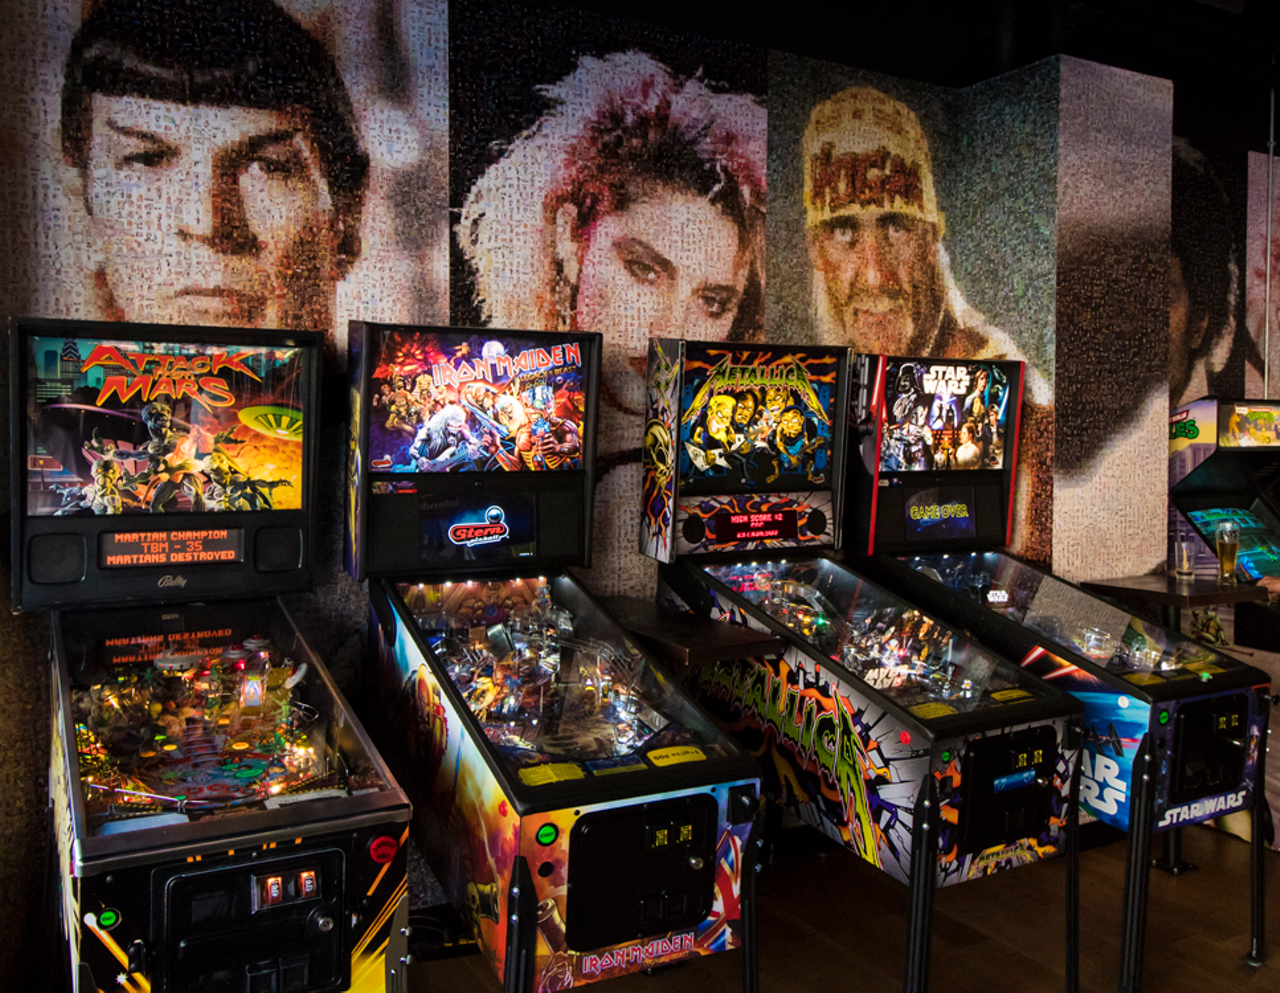 16-Bit Bar+Arcade pinball machines